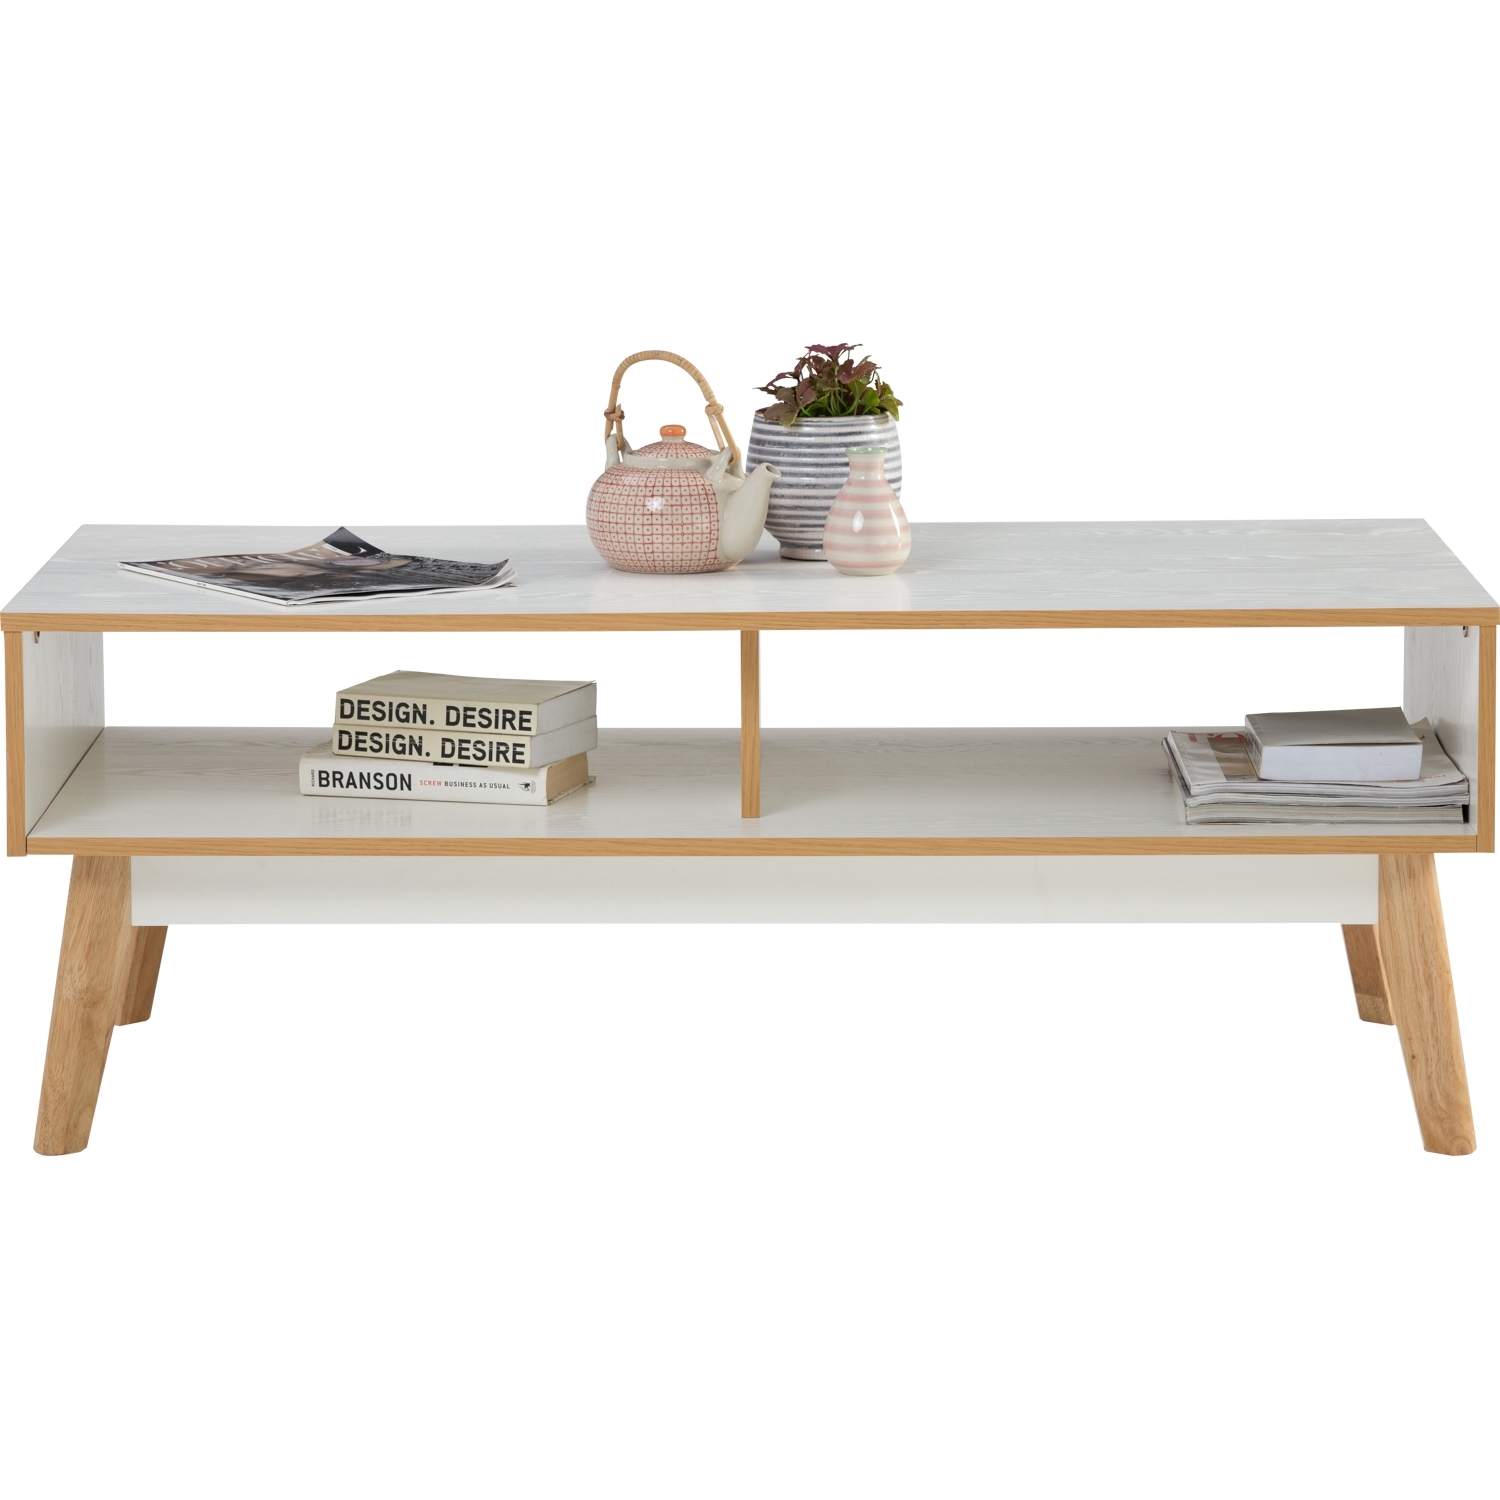 AIMIZON Tterk coffee table in Natural colour leg, White colour top